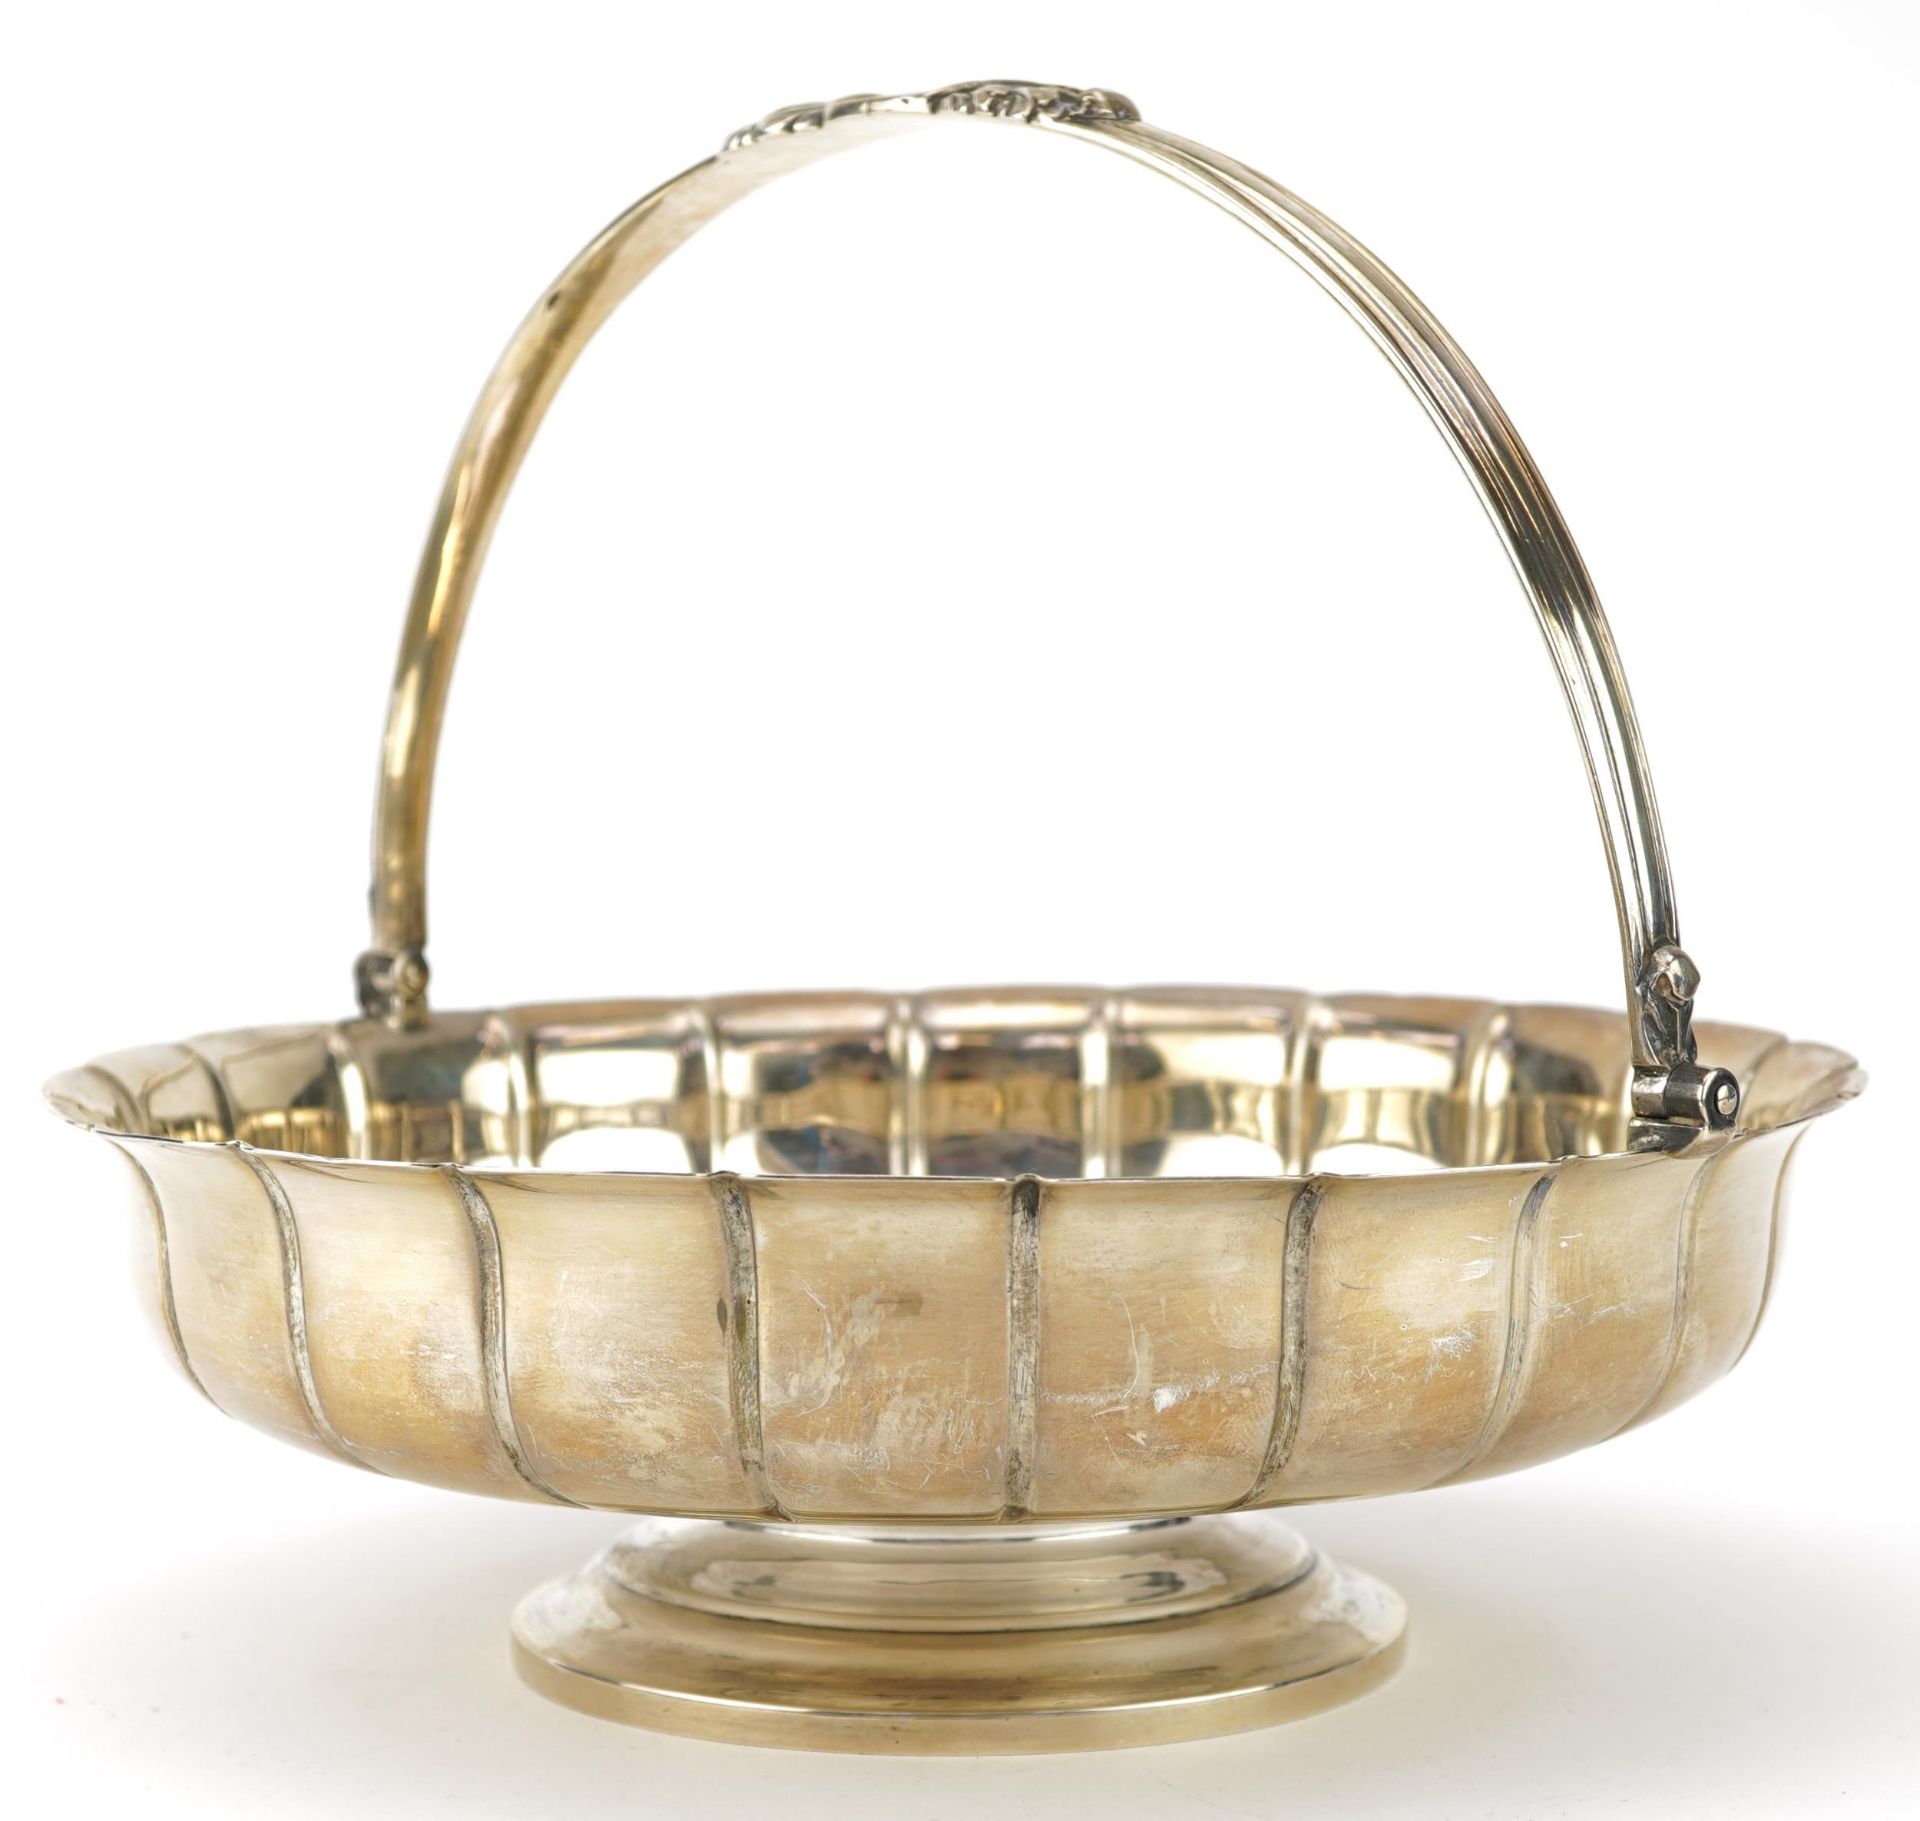 Holland, Aldwinckle & Slater, Edward VII heavy silver fruit bowl with swing handle, London 1908,